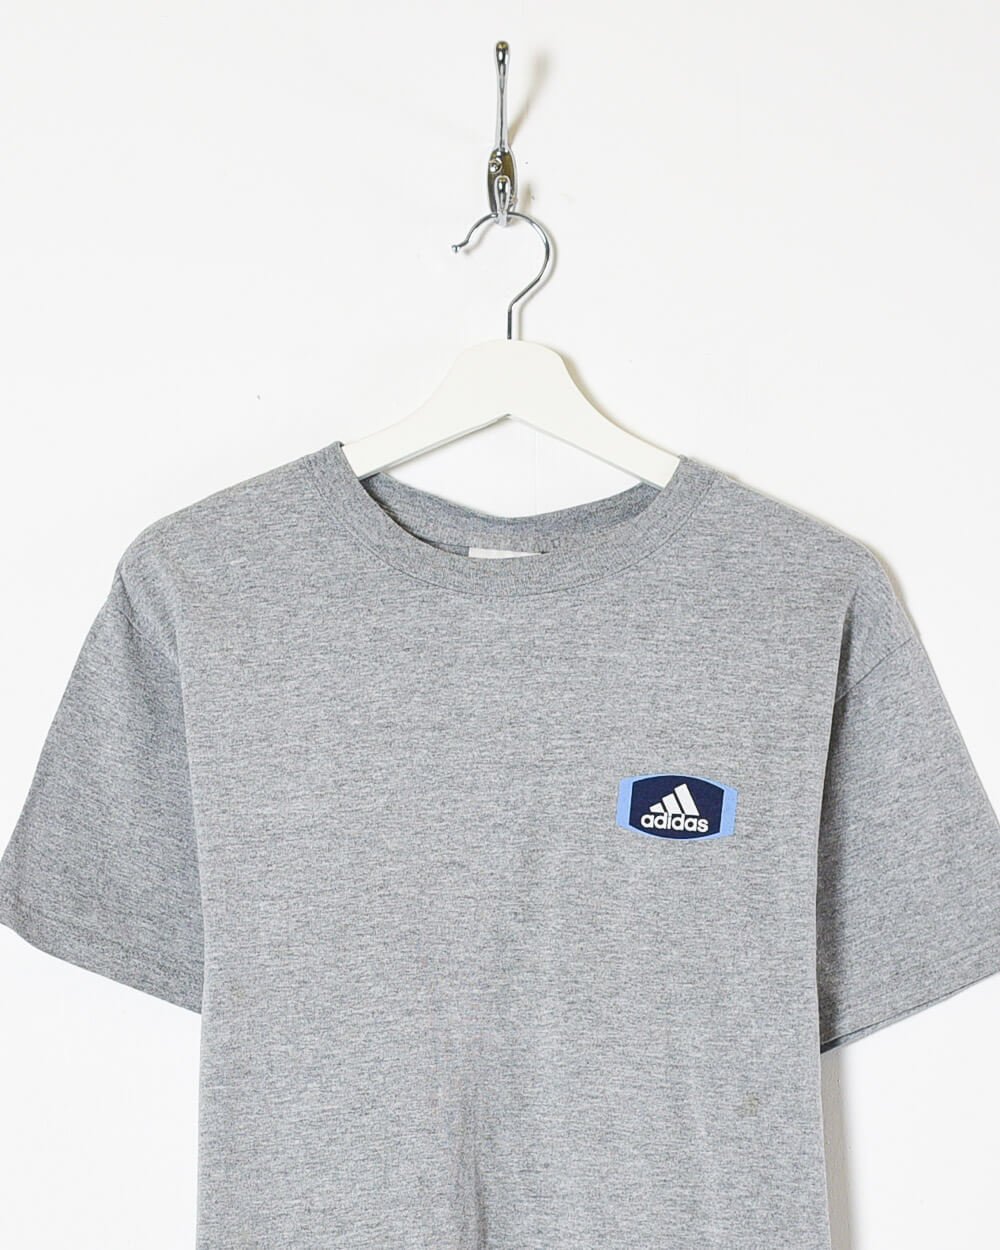 Stone Adidas T-Shirt - Small